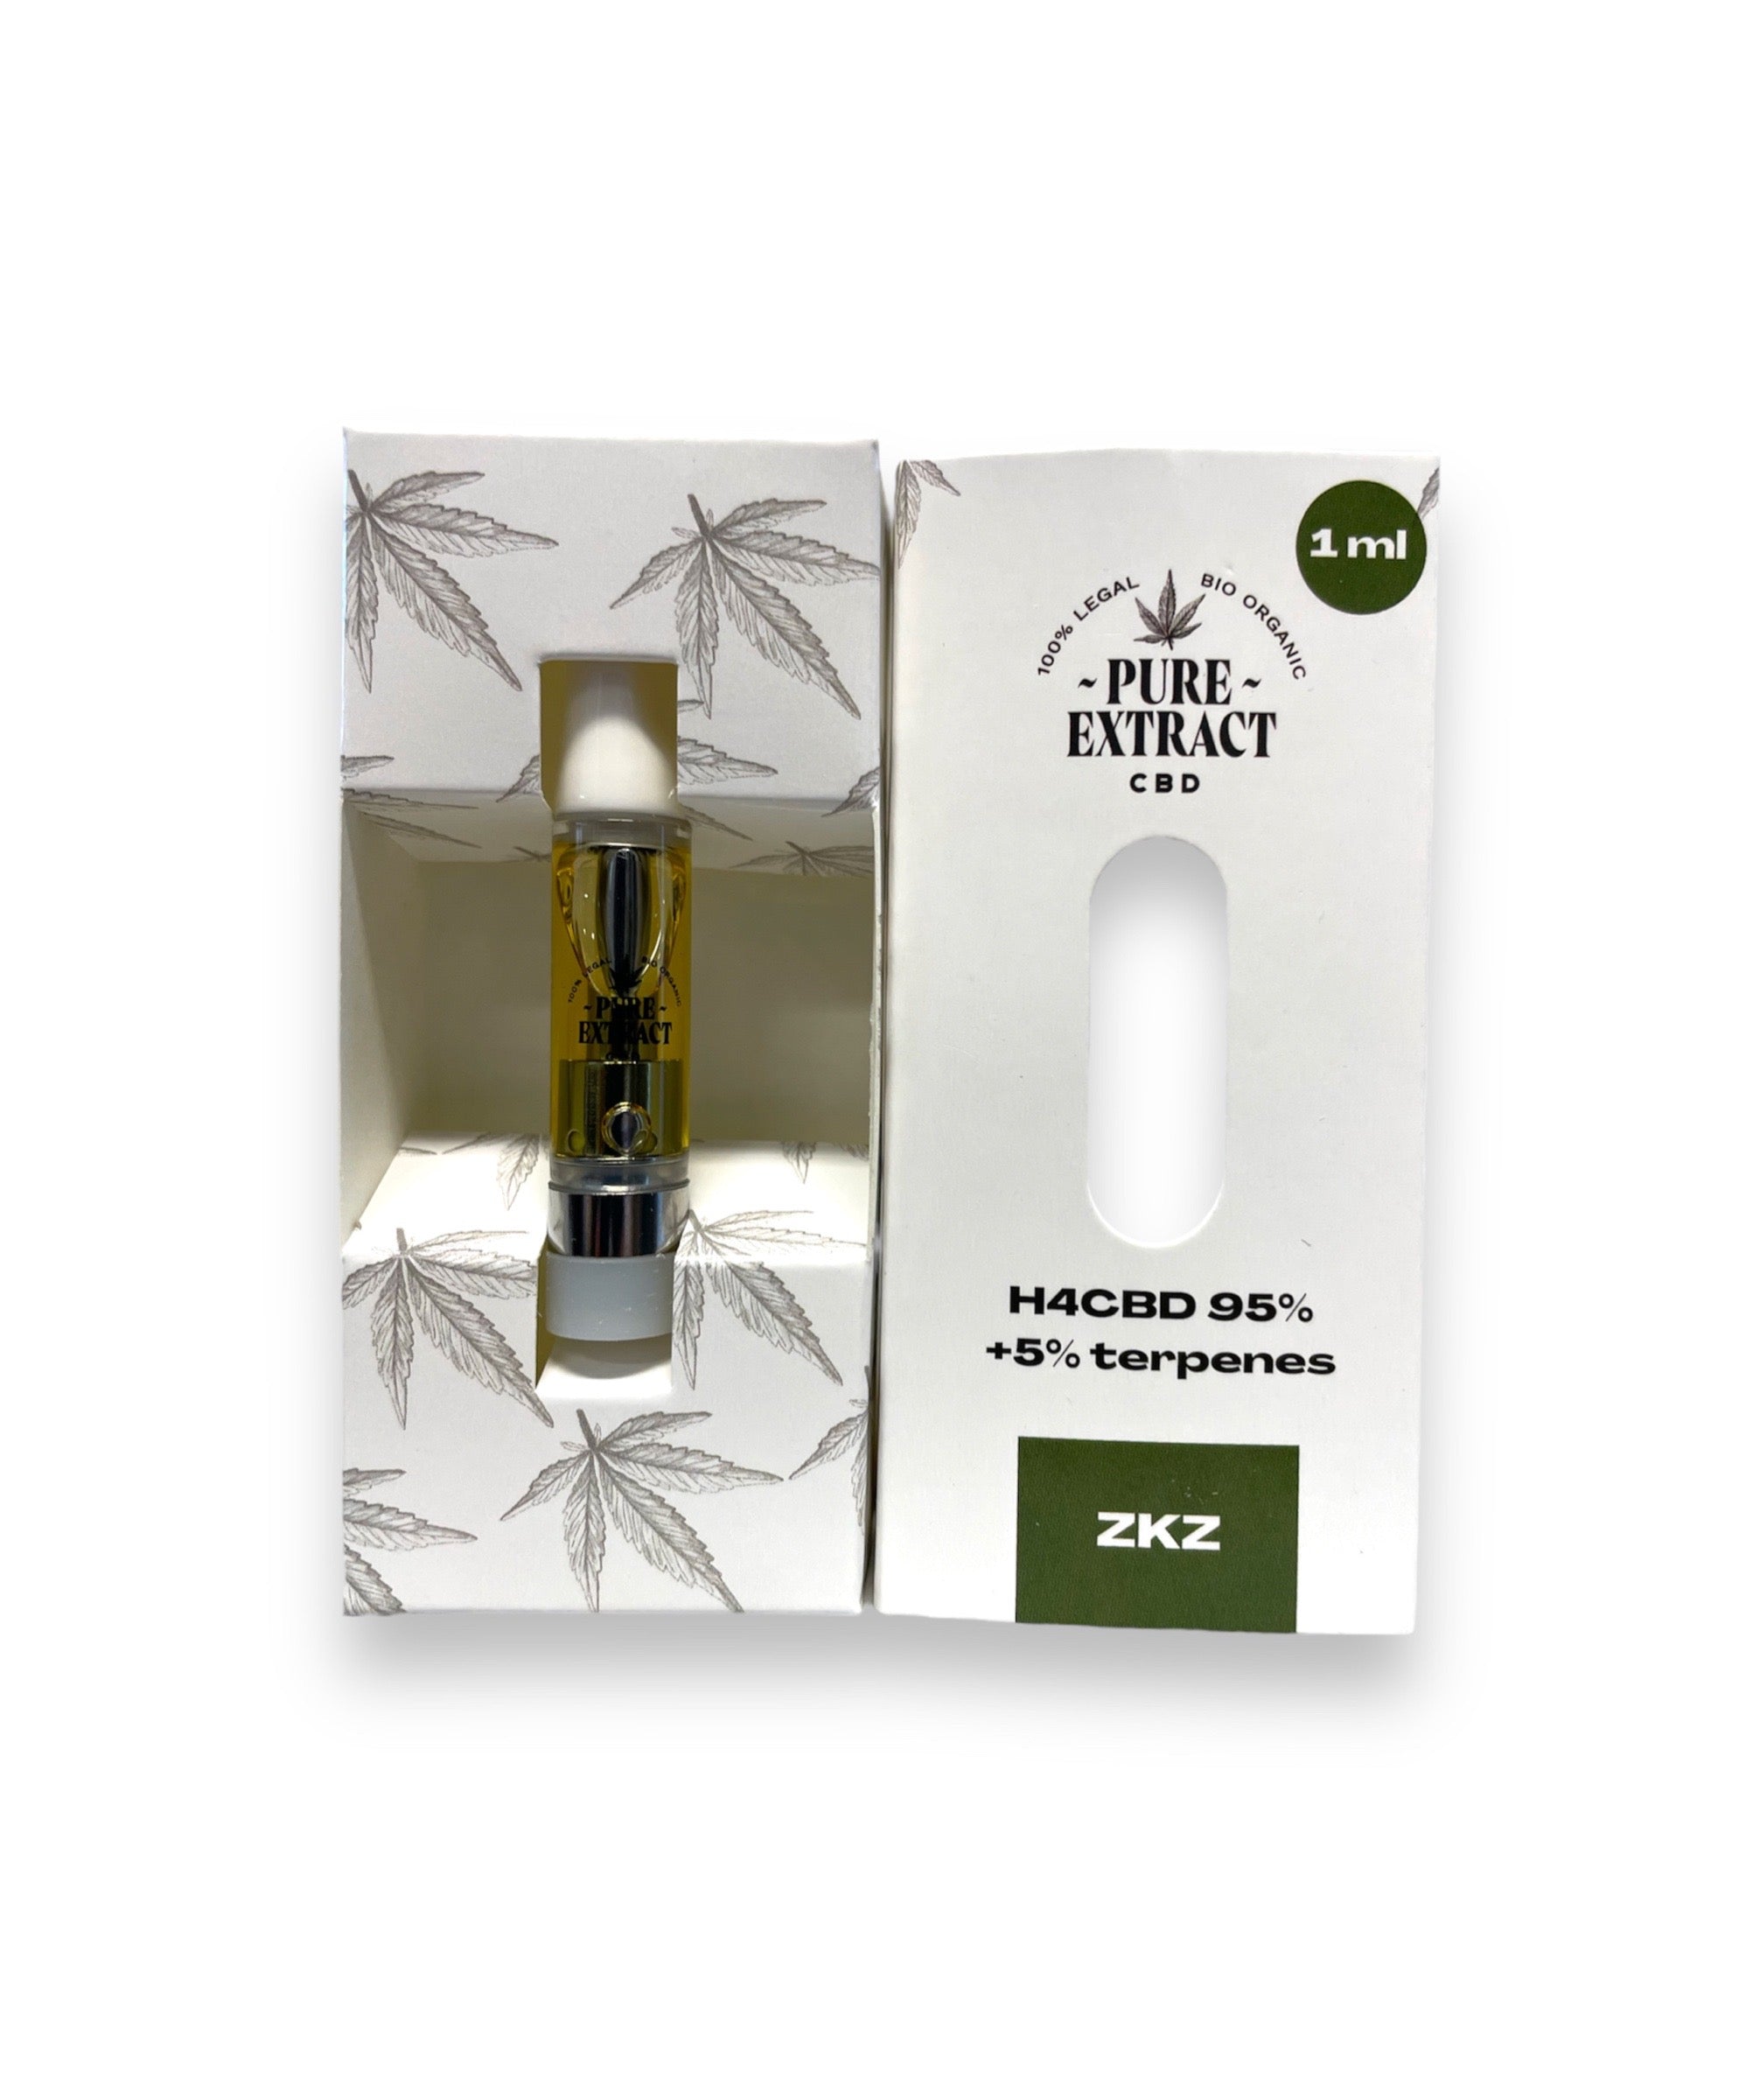 Pure Extract CBD Cartridge (Dab Pen) by H4CBD - ZKZ - 95% H4CBD - 1ML - 600 puffs